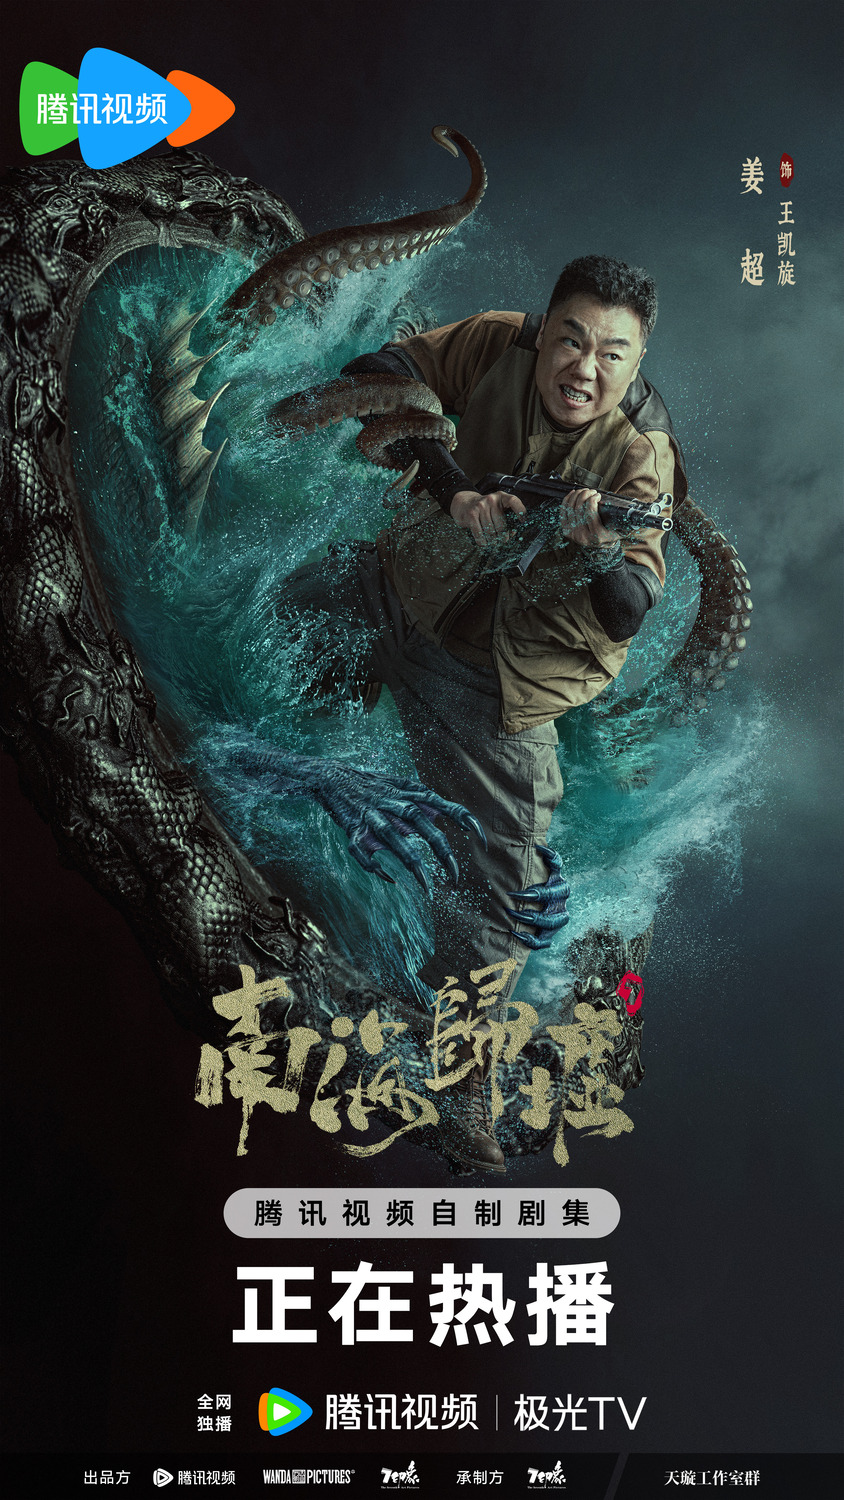 Extra Large TV Poster Image for Nan hai gui xu (#1 of 6)